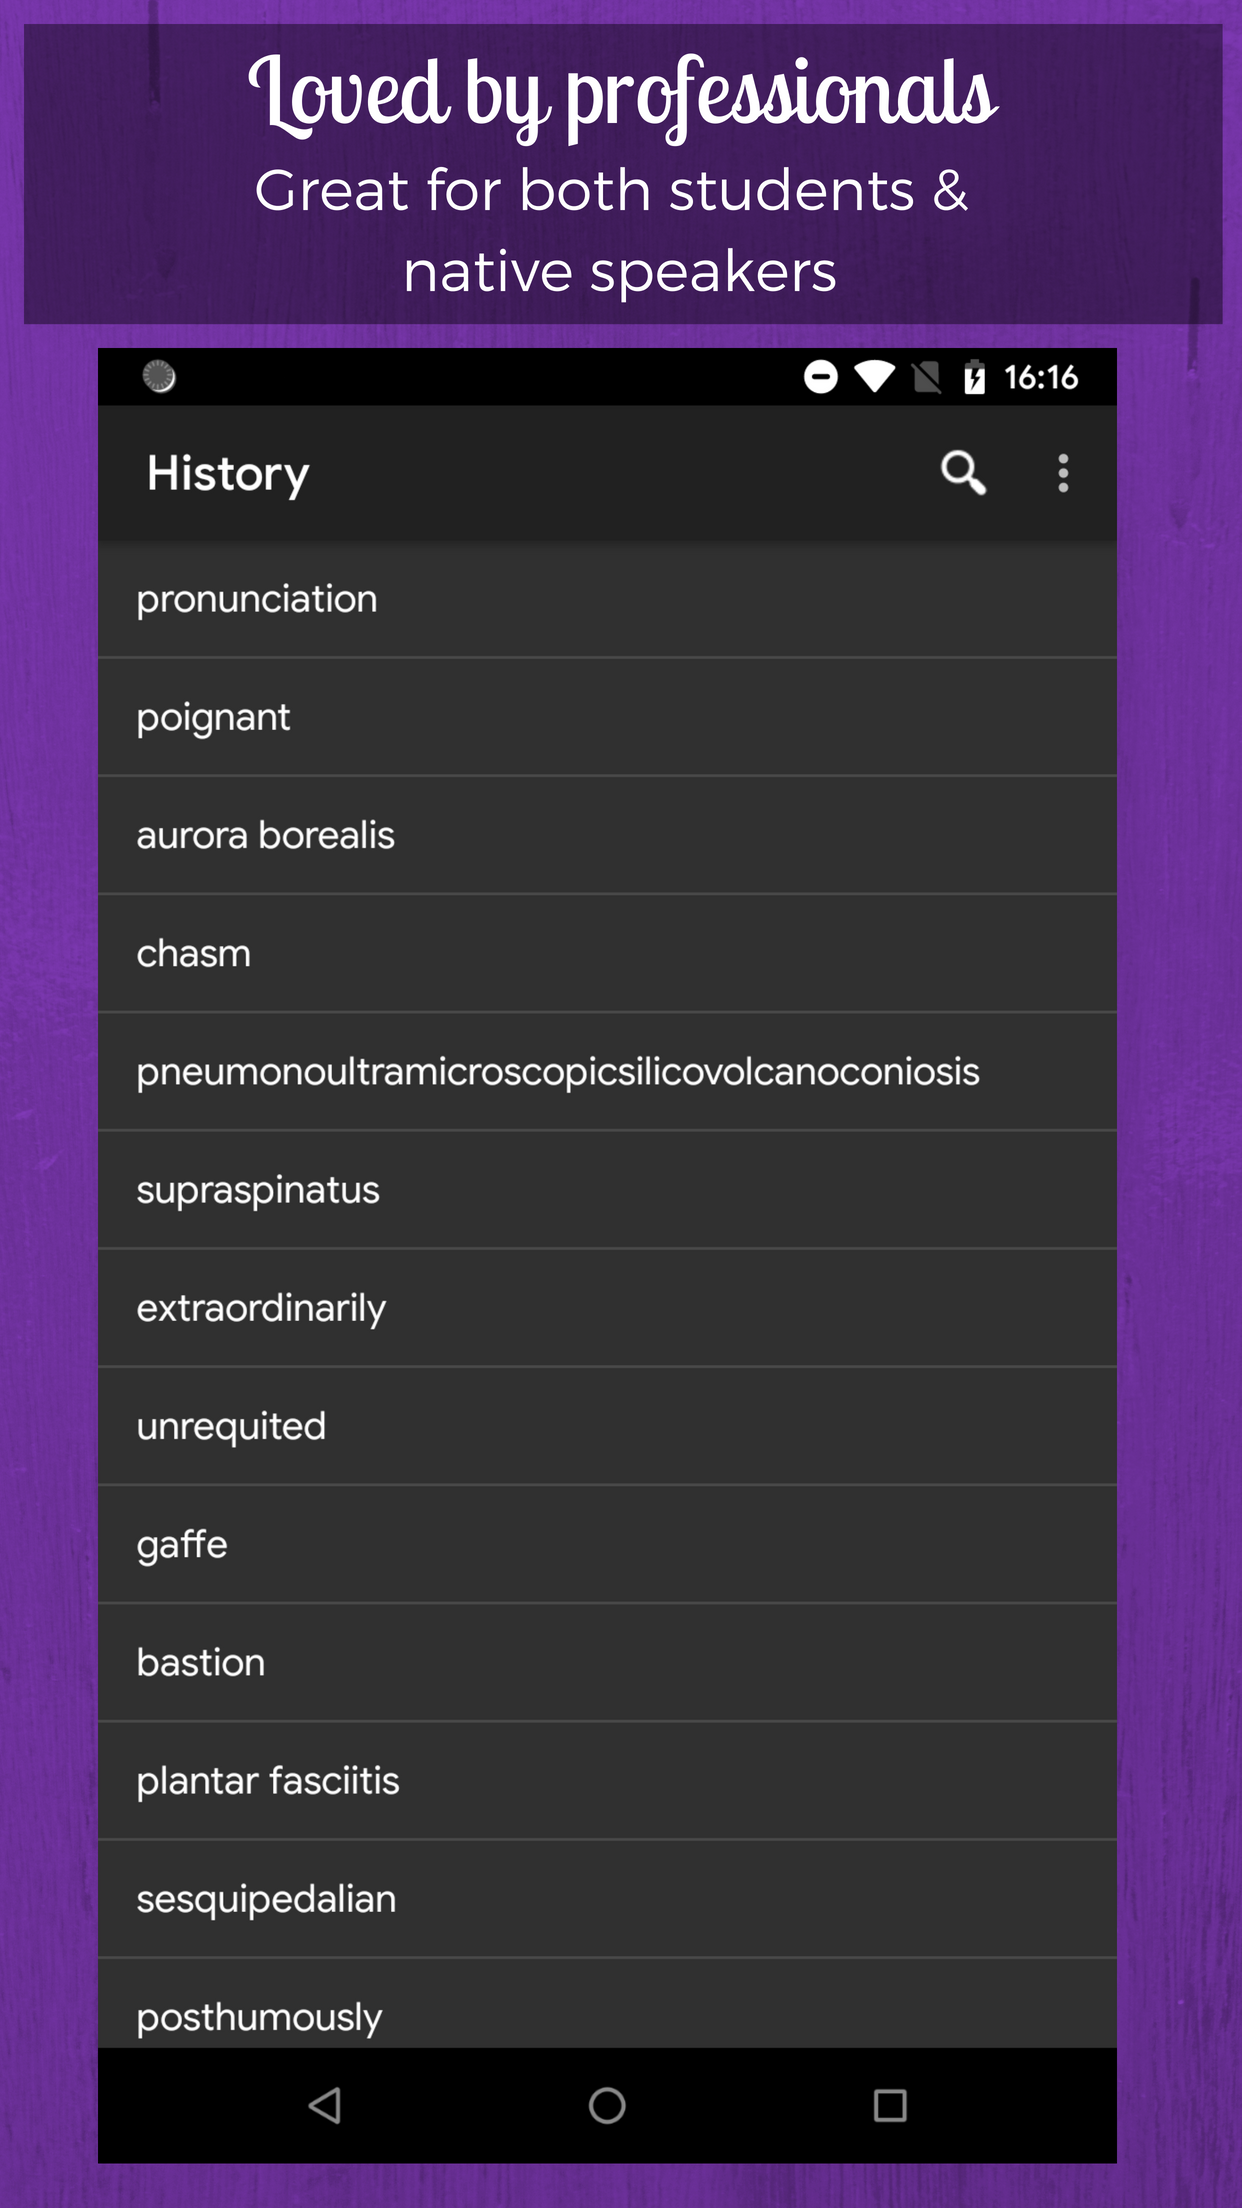 Android application Howjsay English Pronunciation screenshort